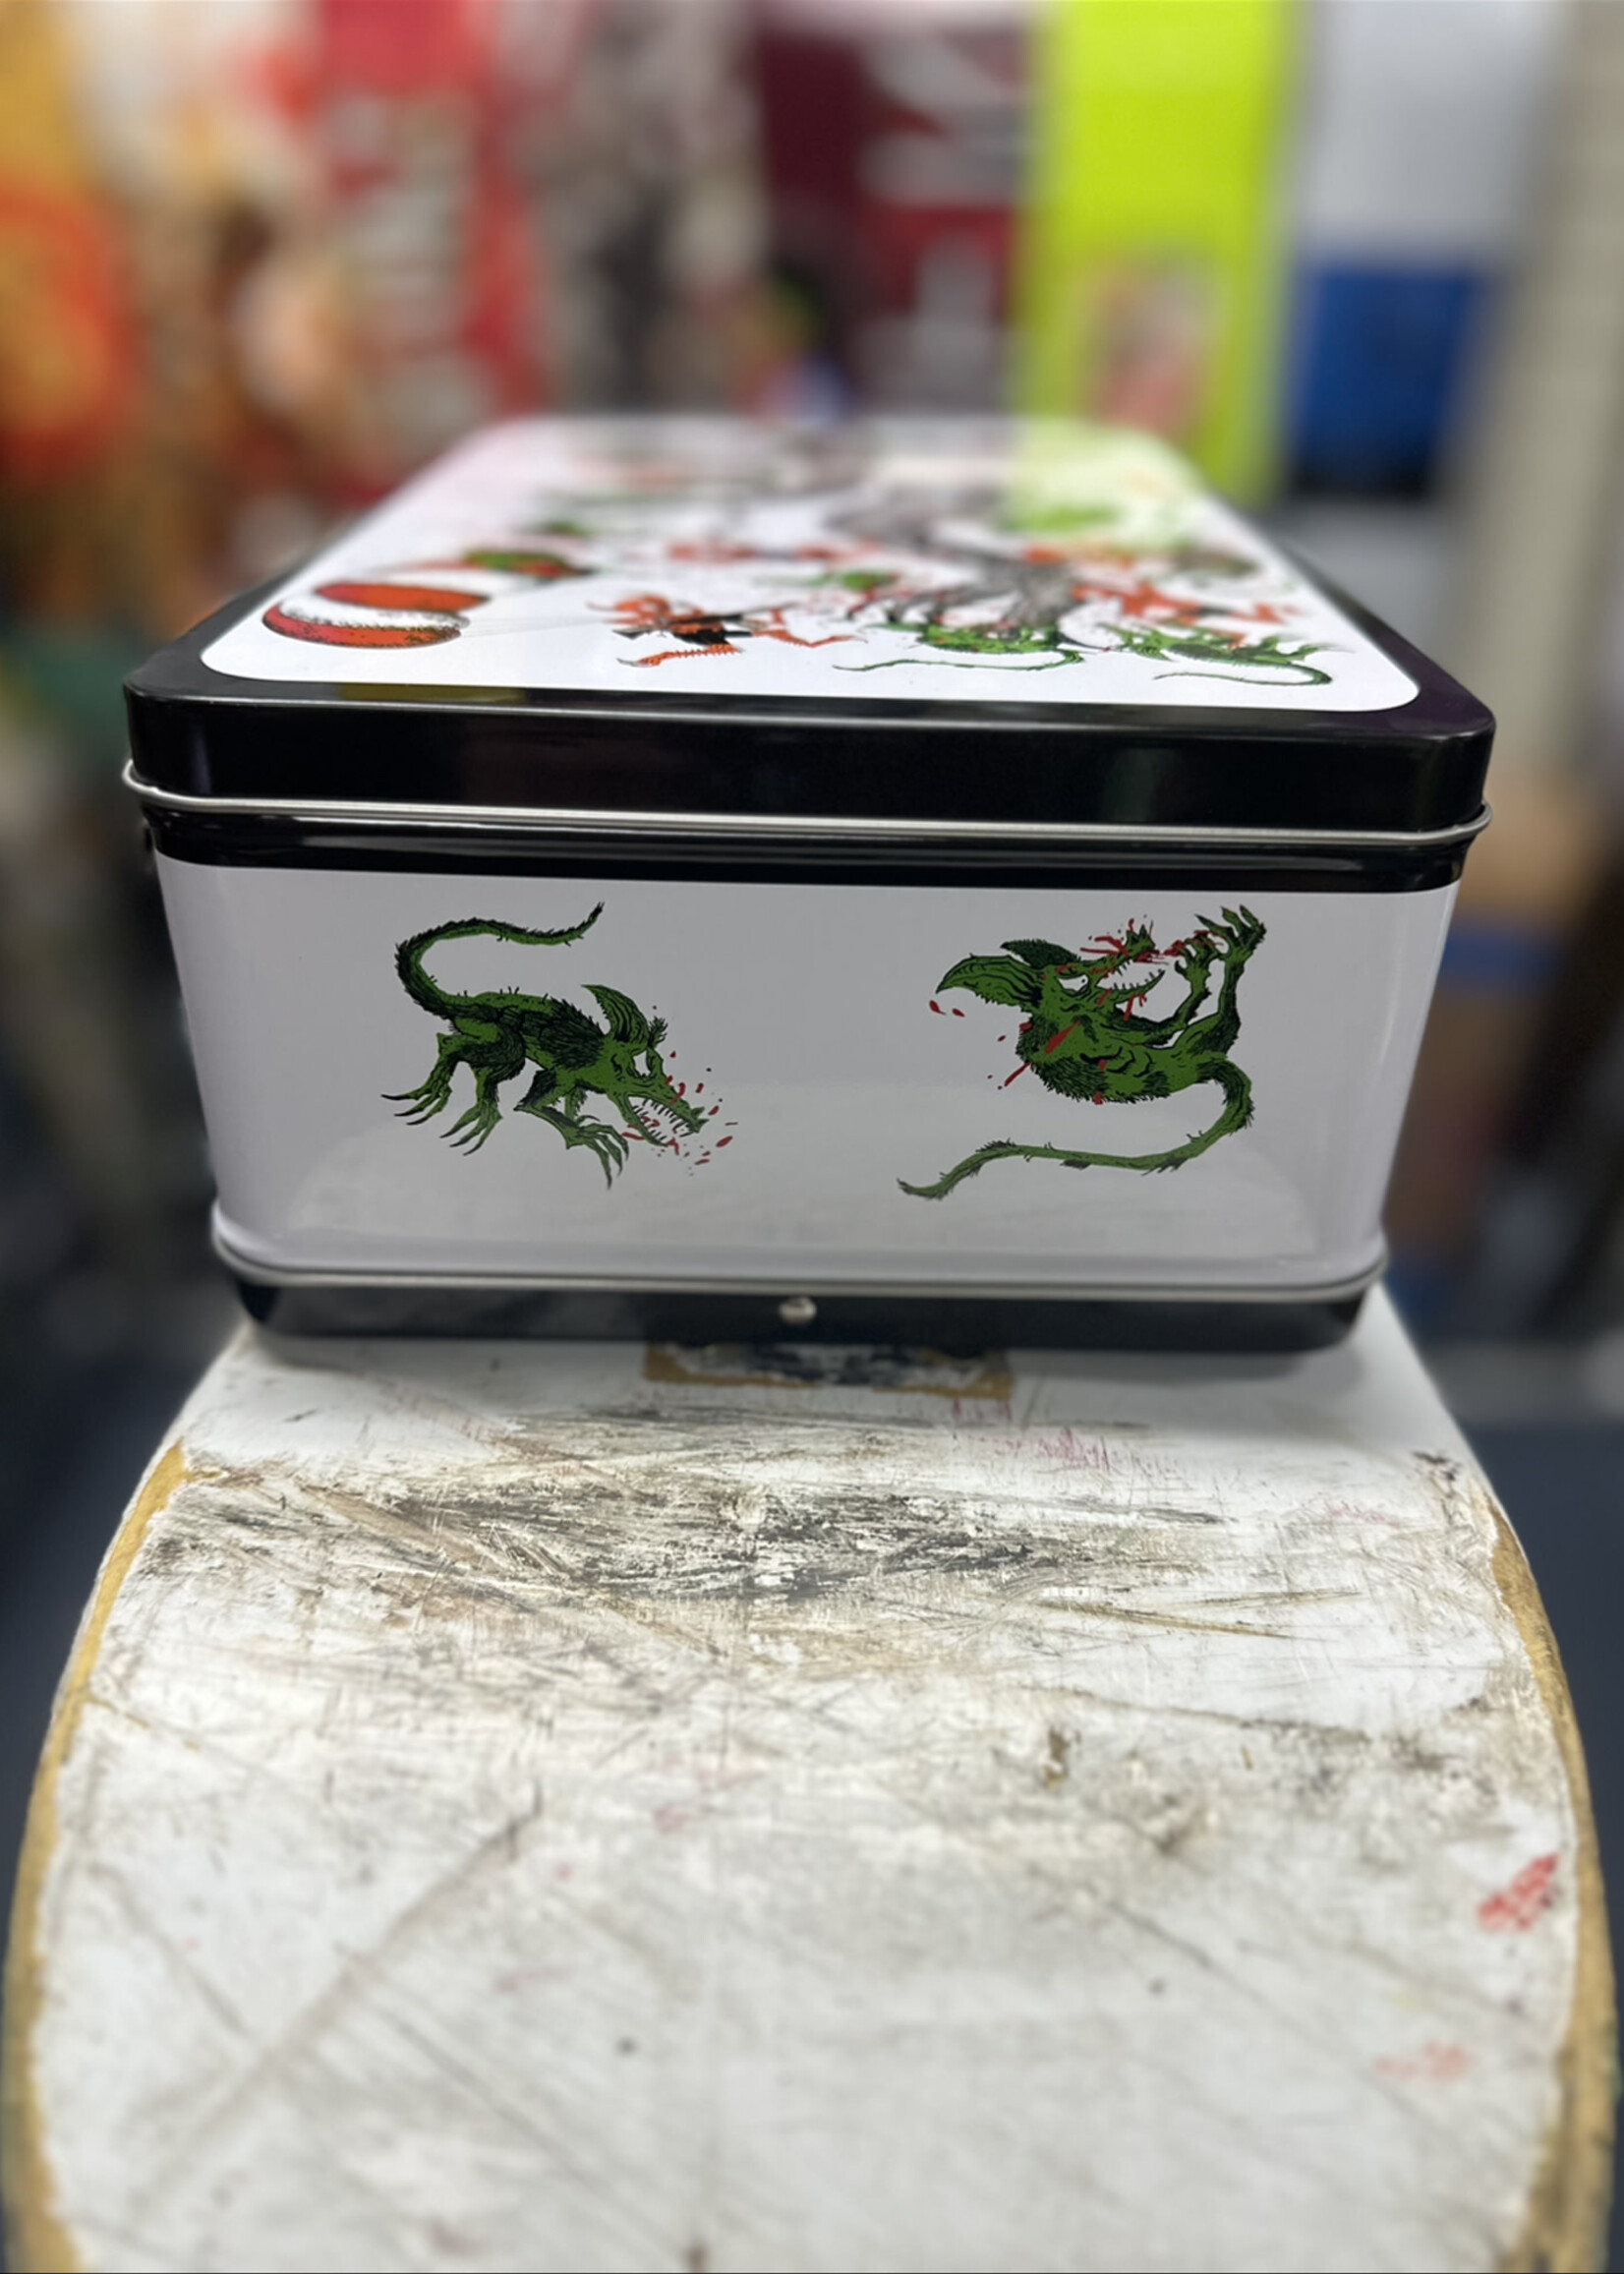 BAKER SKATEBOARDS BAKER - Toxic Rats Tin Lunch Box by Neckface